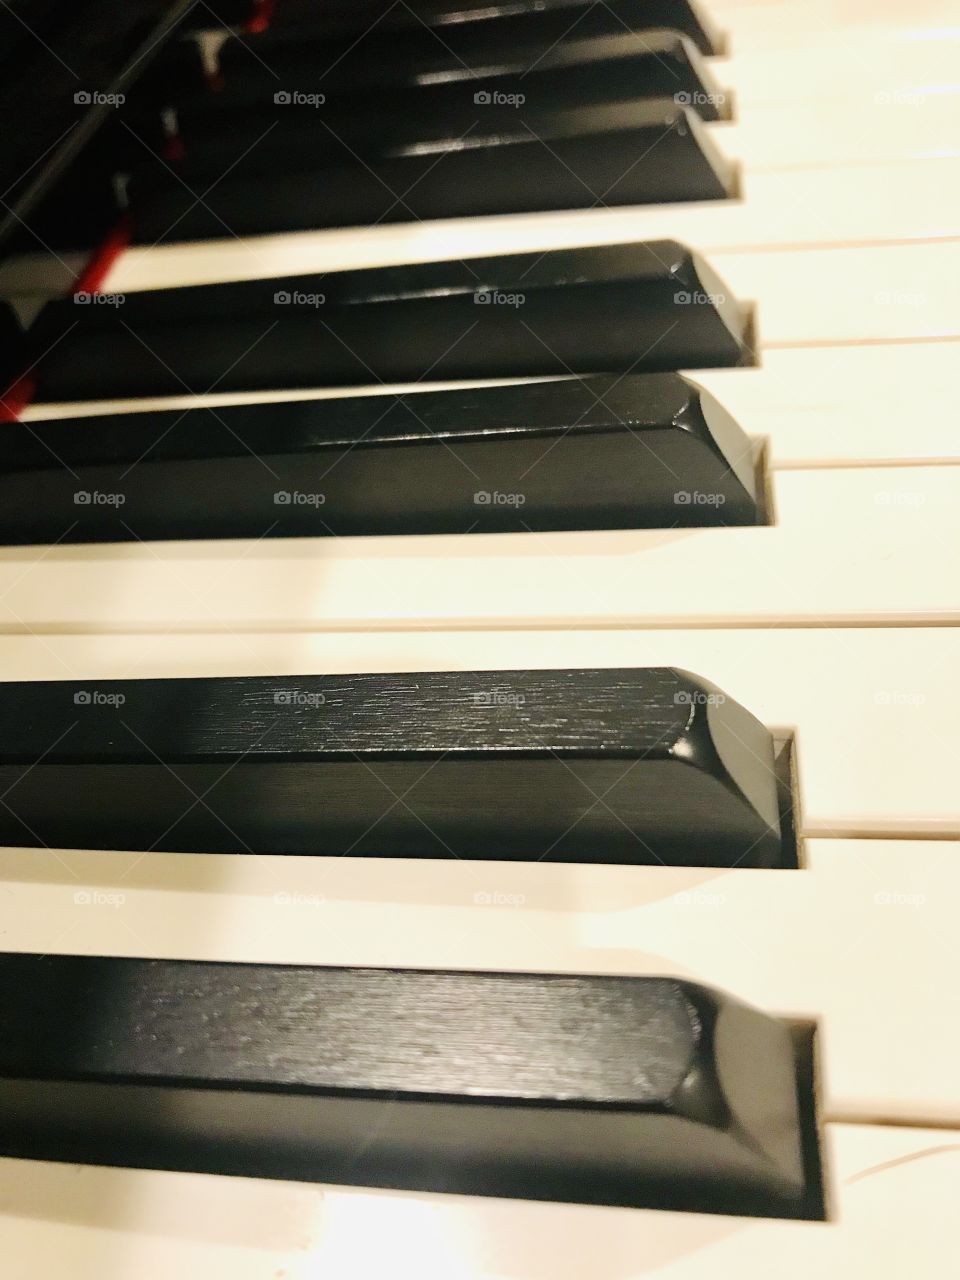 Gorgeous black and white rectangular piano keys make for a pretty photo! 